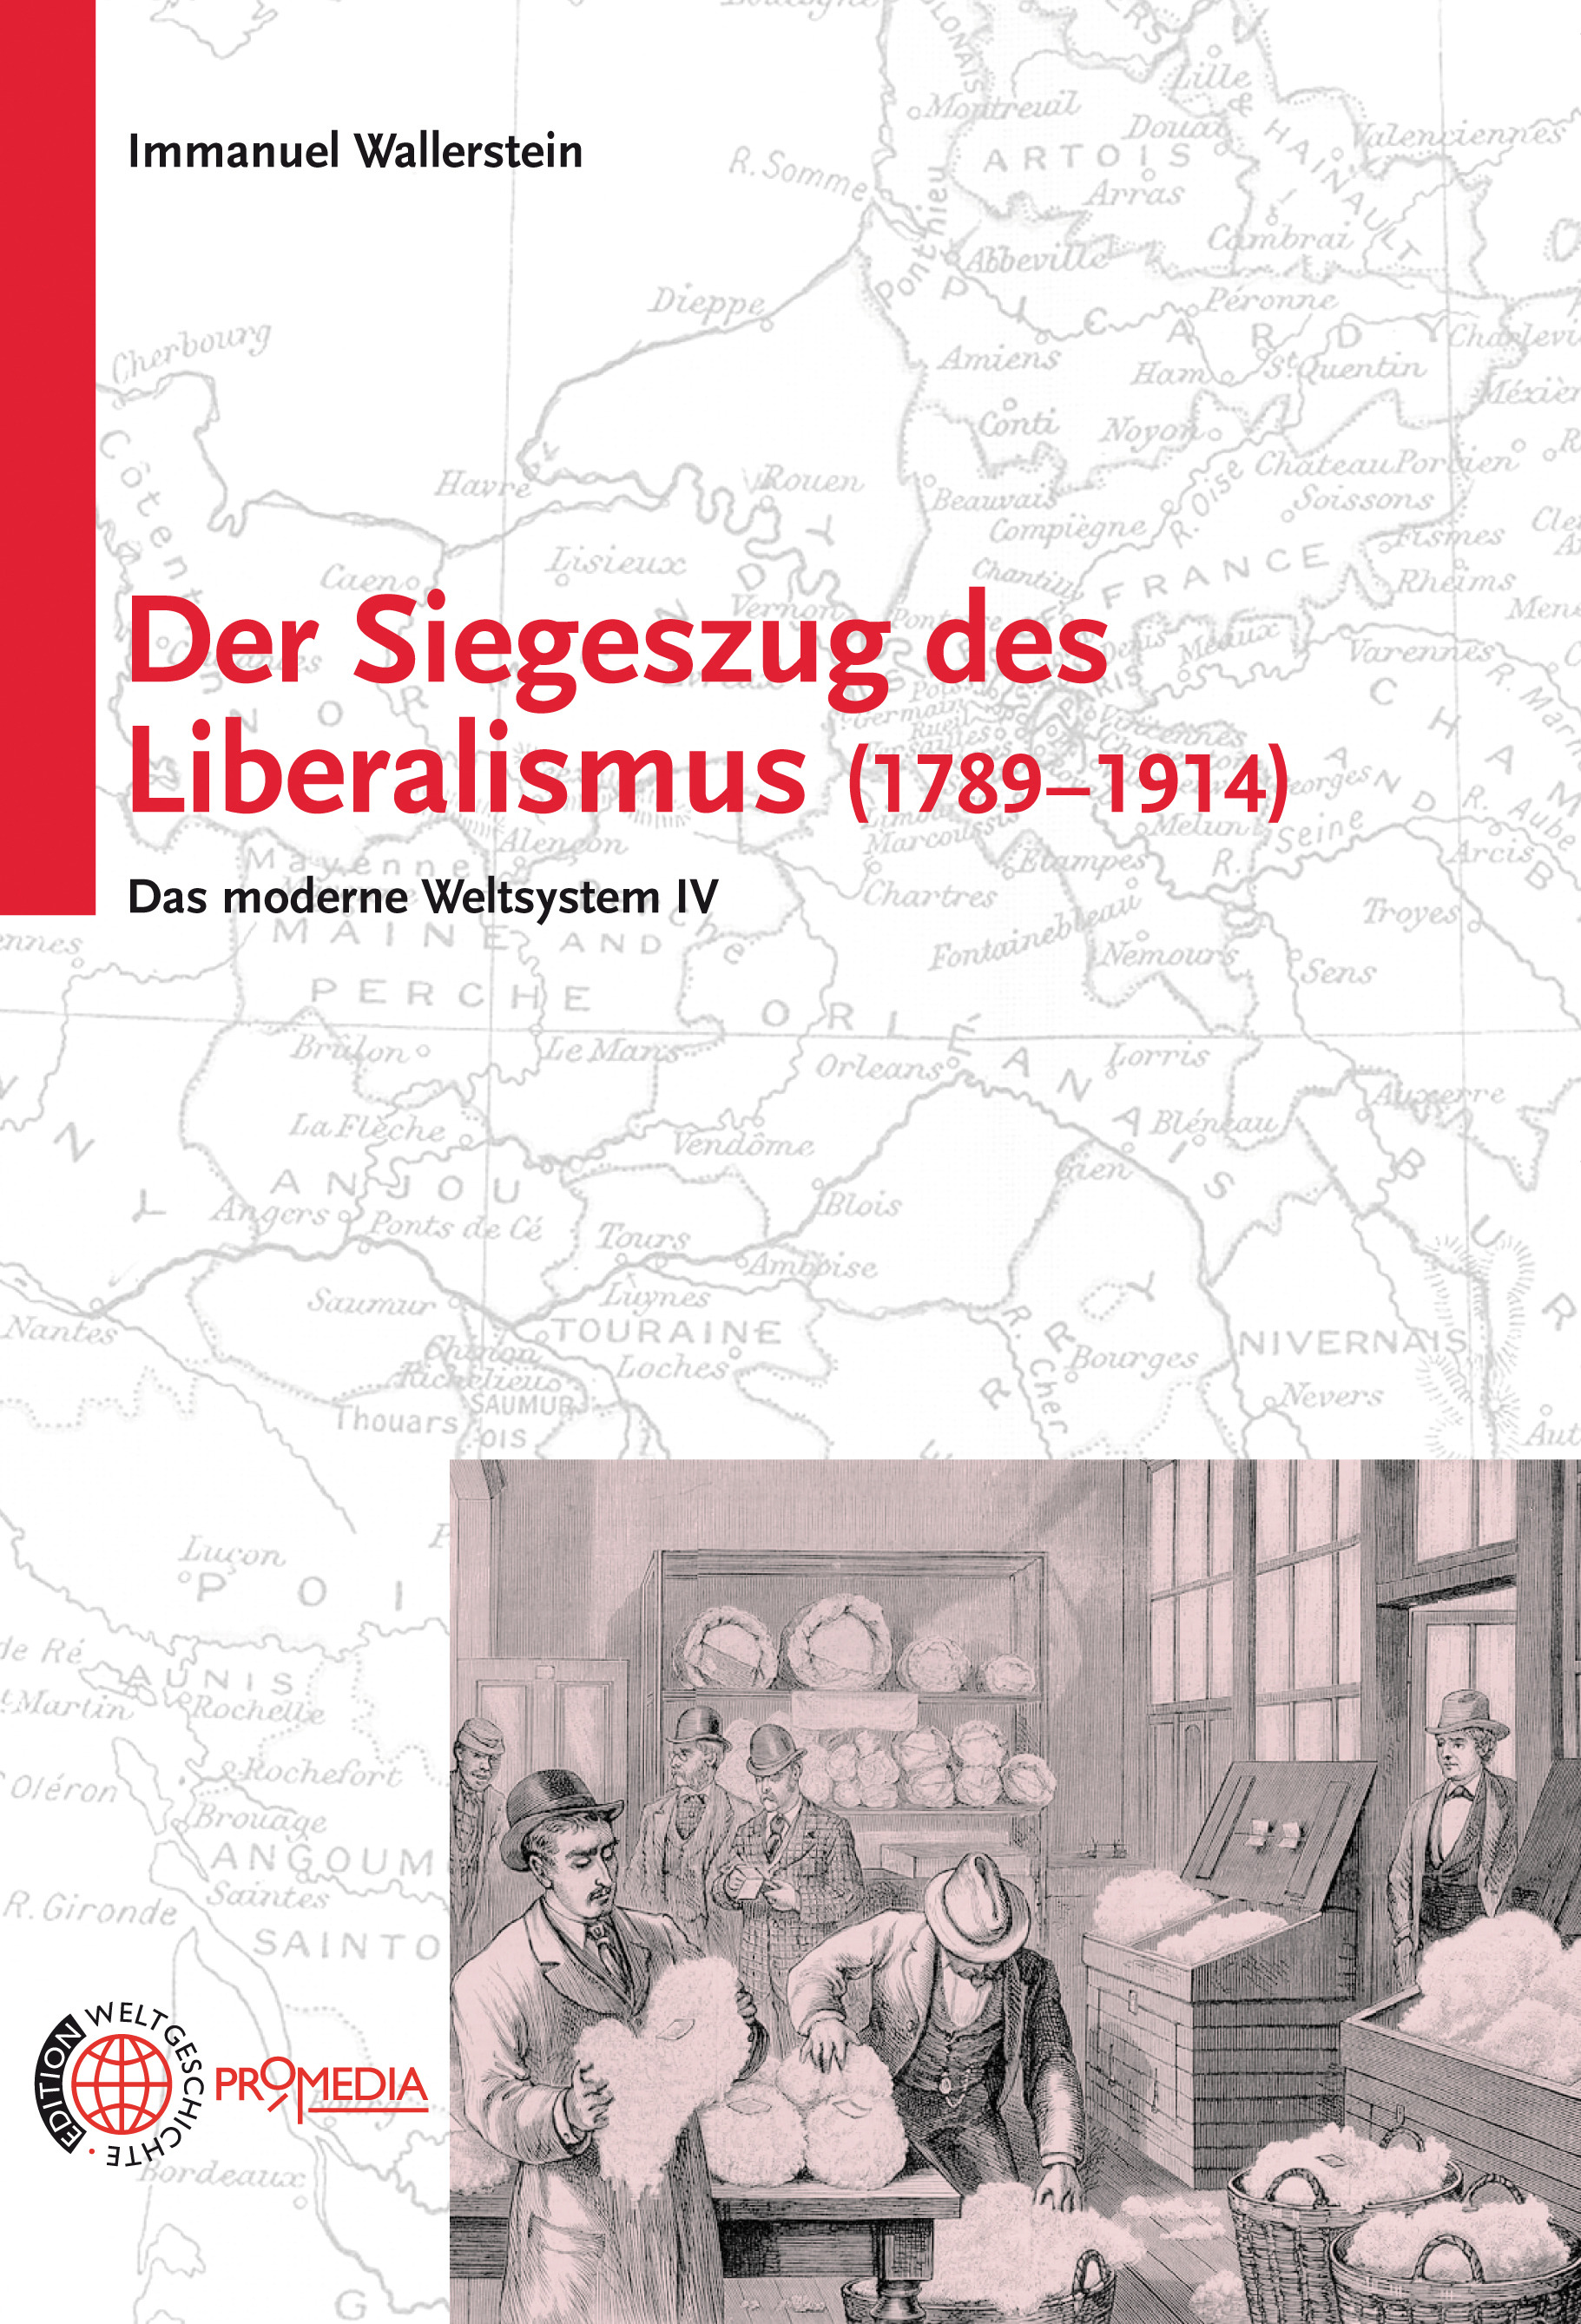 [Cover] Der Siegeszug des Liberalismus (1789 - 1914)